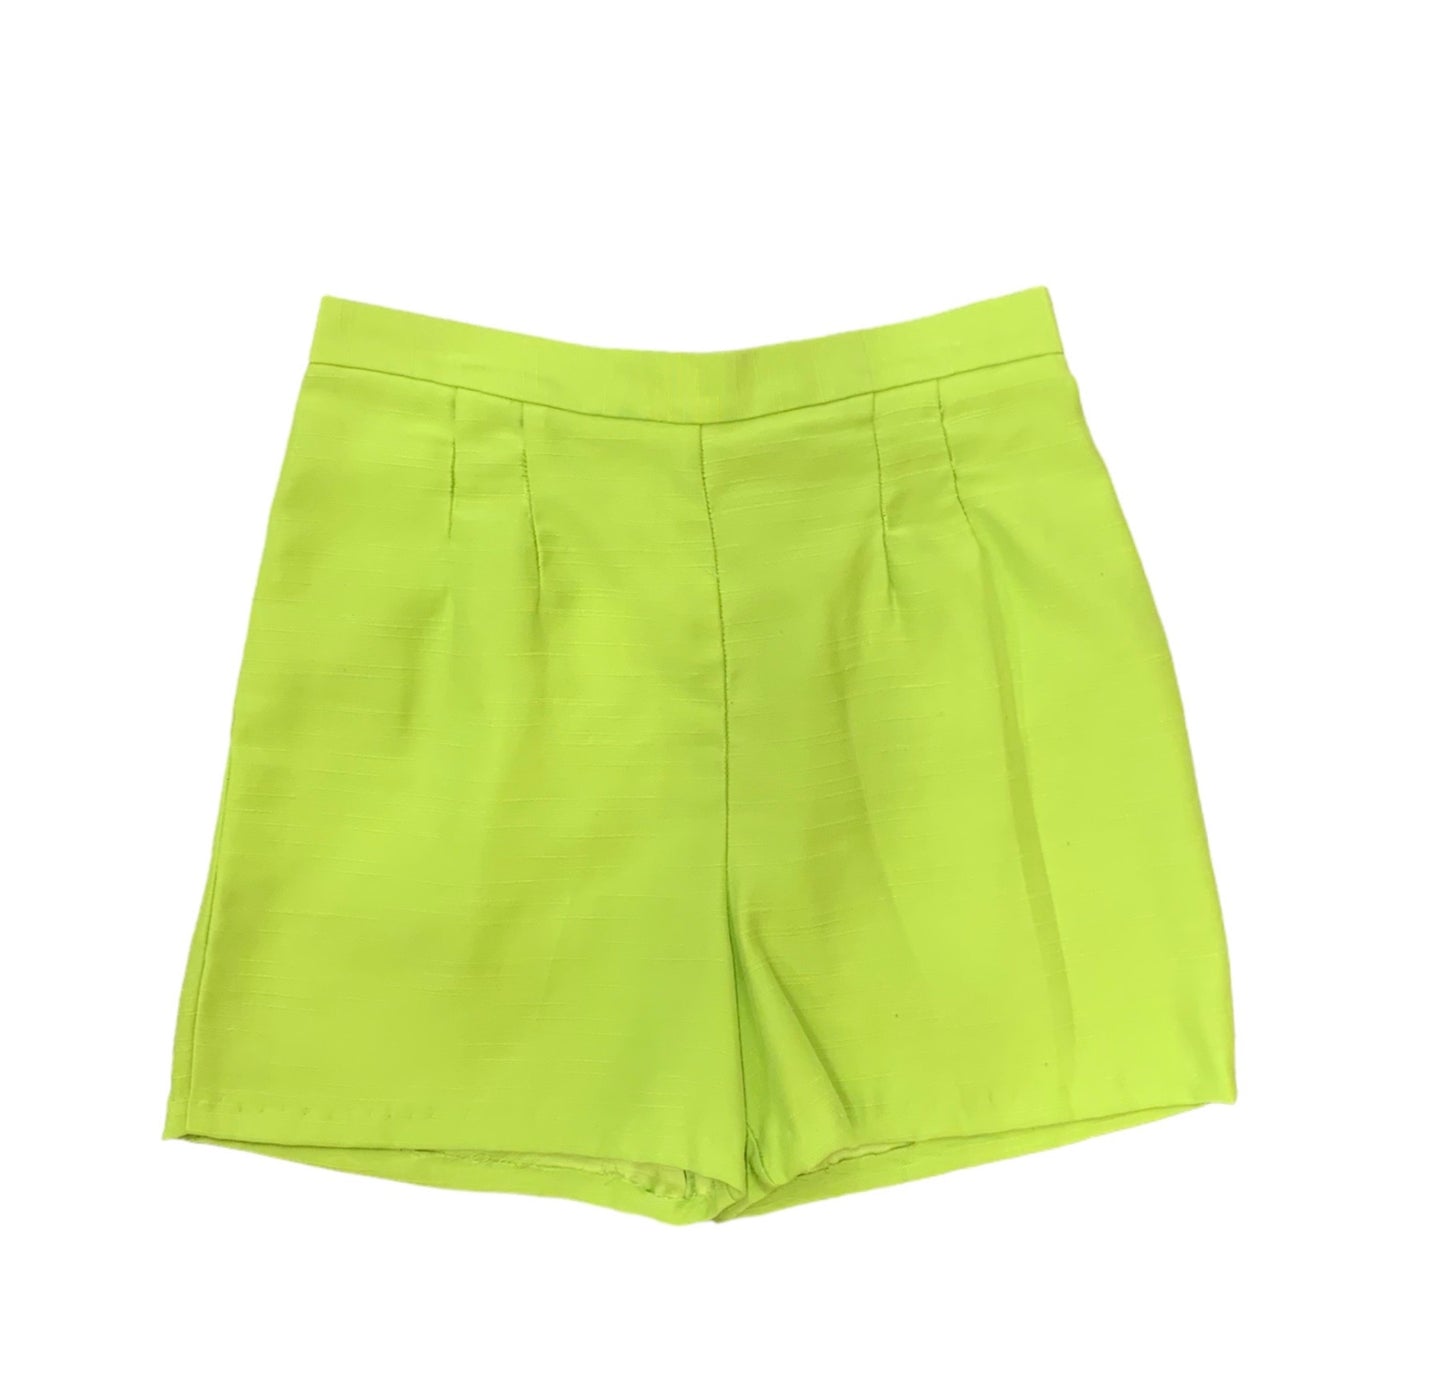 Chartreuse shorts